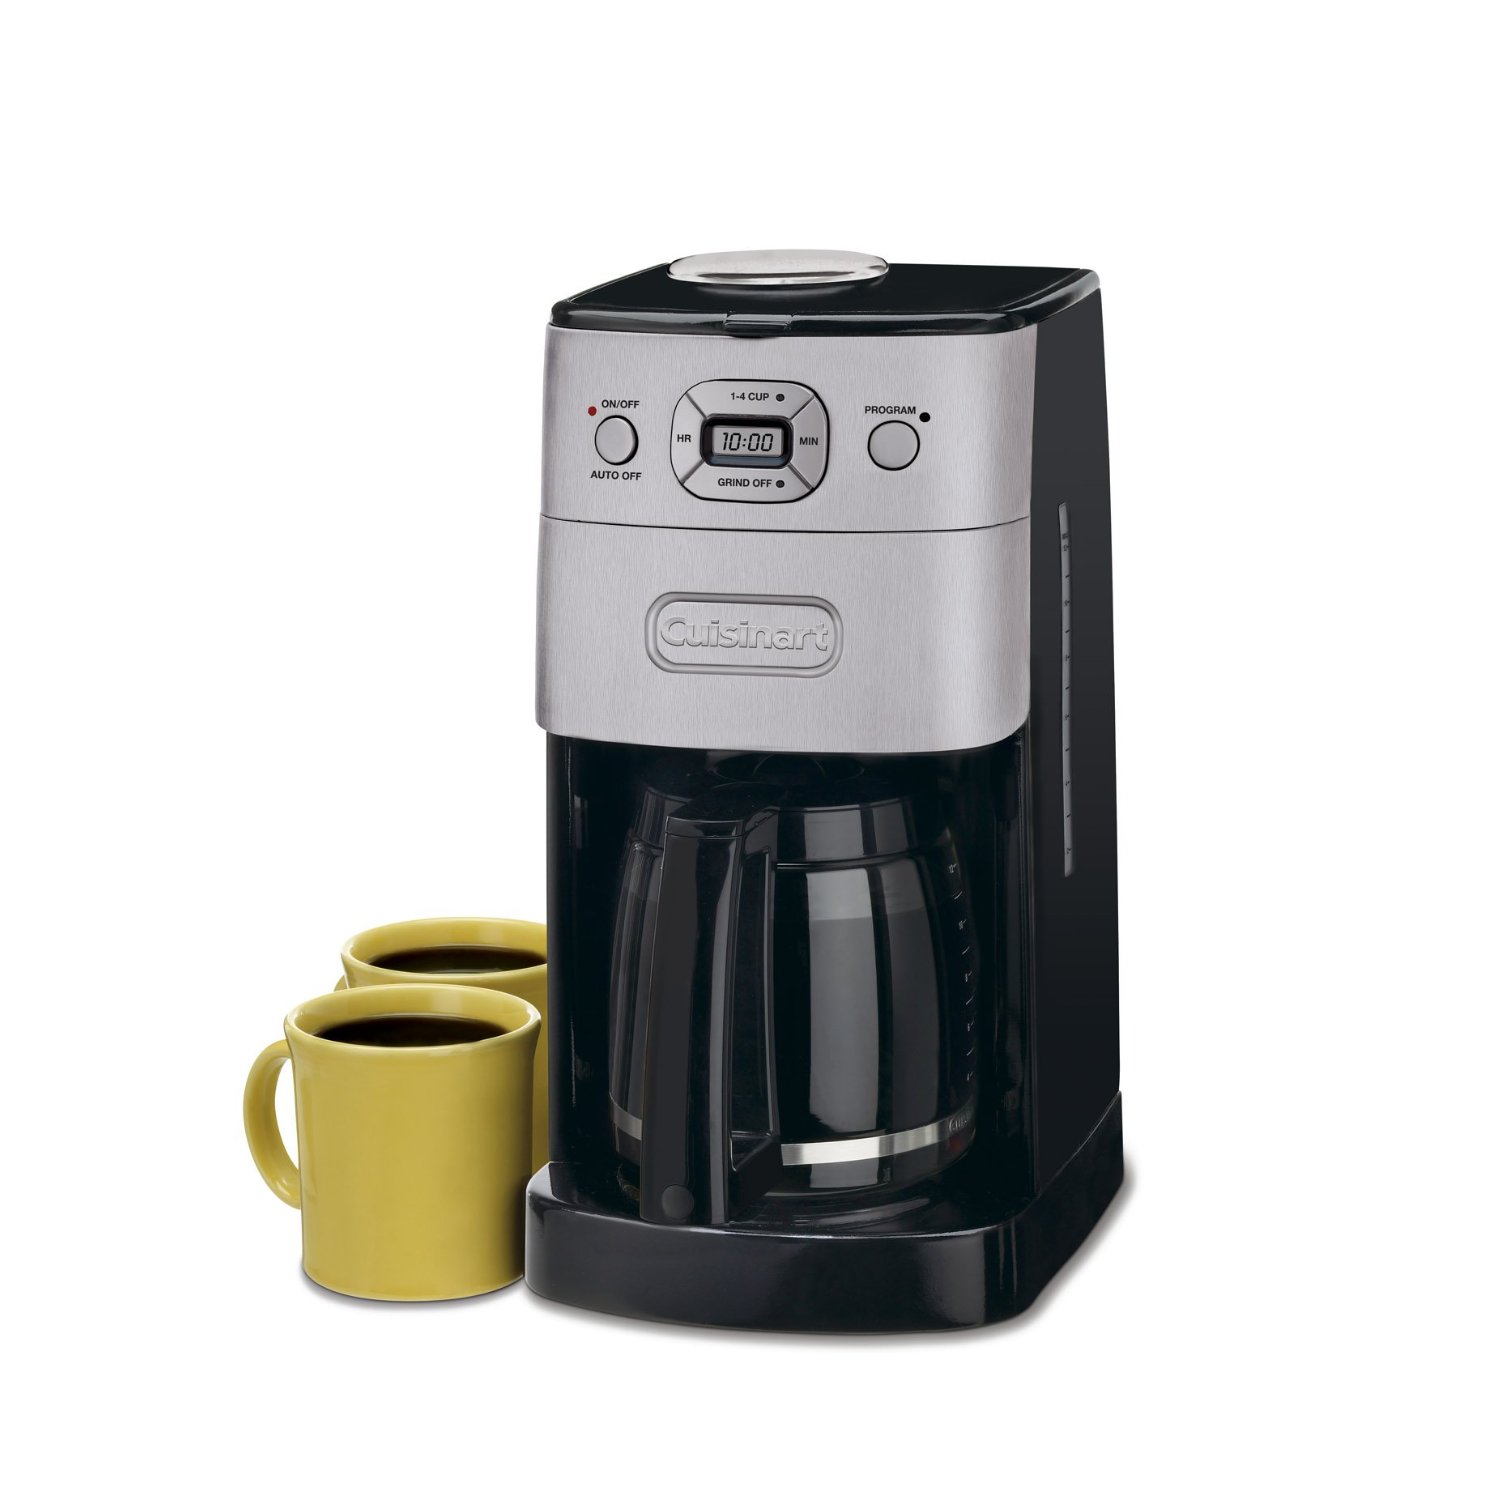 Cuisinart-美康雅 DGB-625BC 12杯全自动酿造研磨滤滴式咖啡机